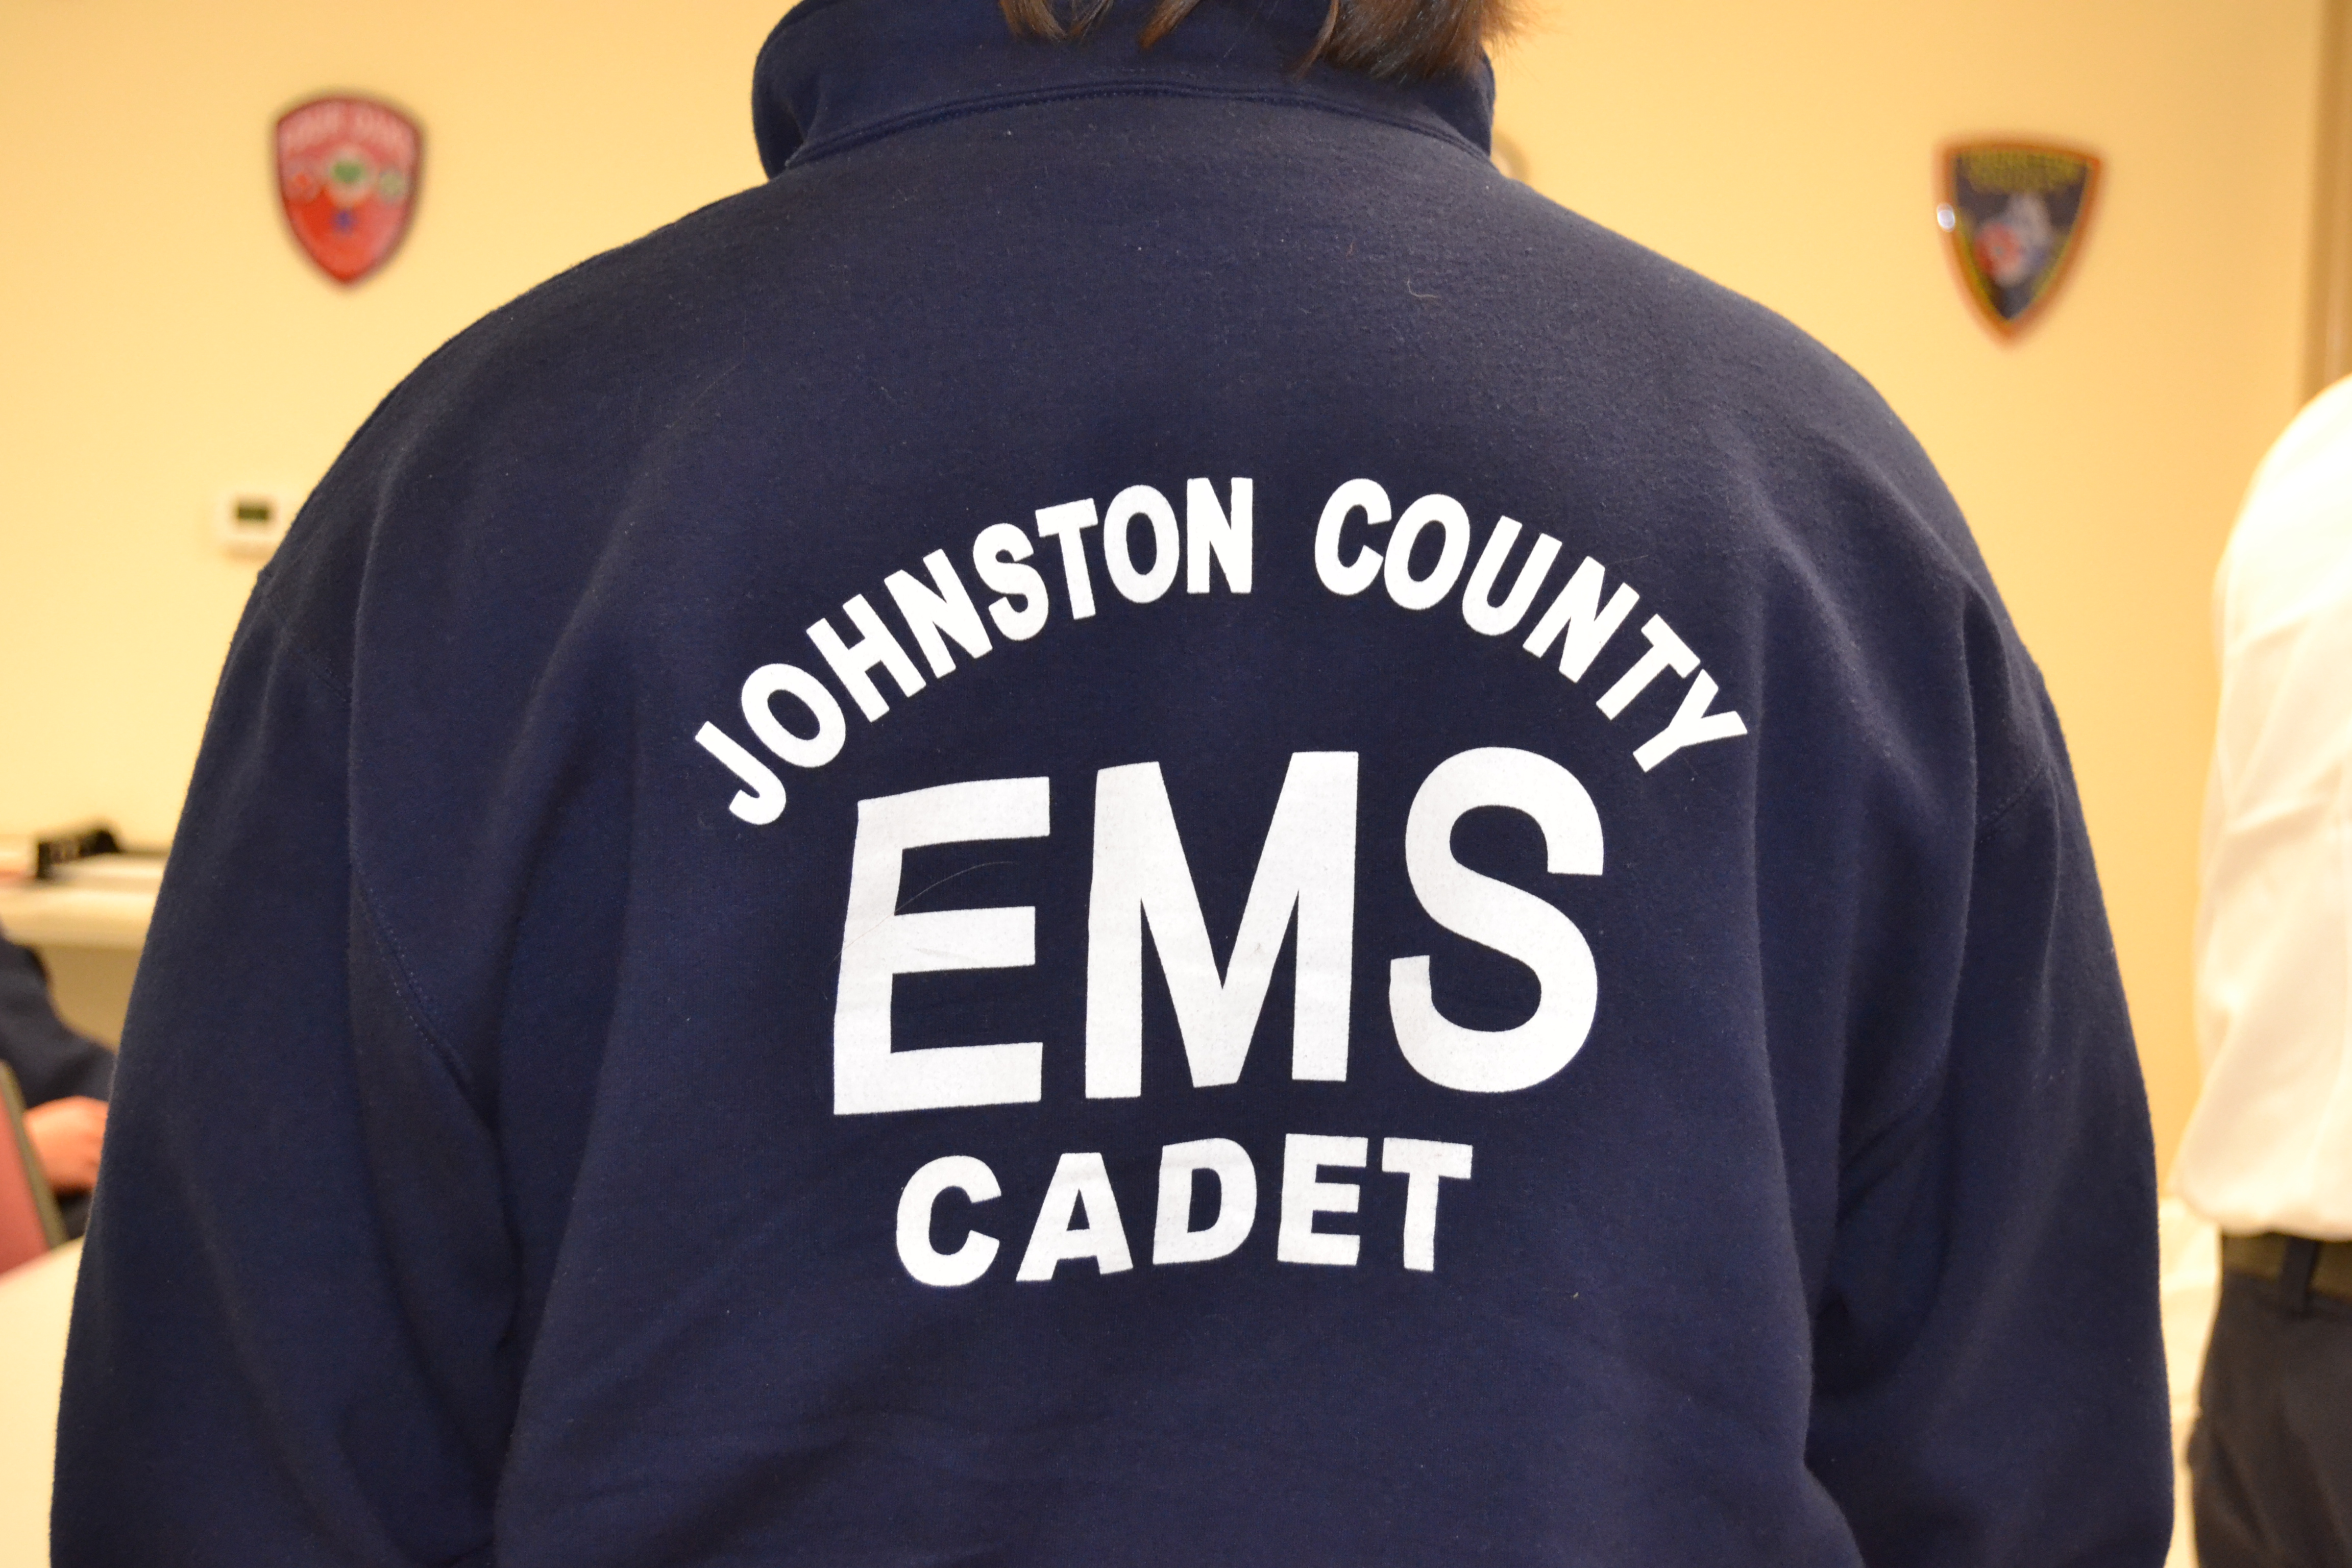 Johnston County EMS Cadet Job Shirt Design